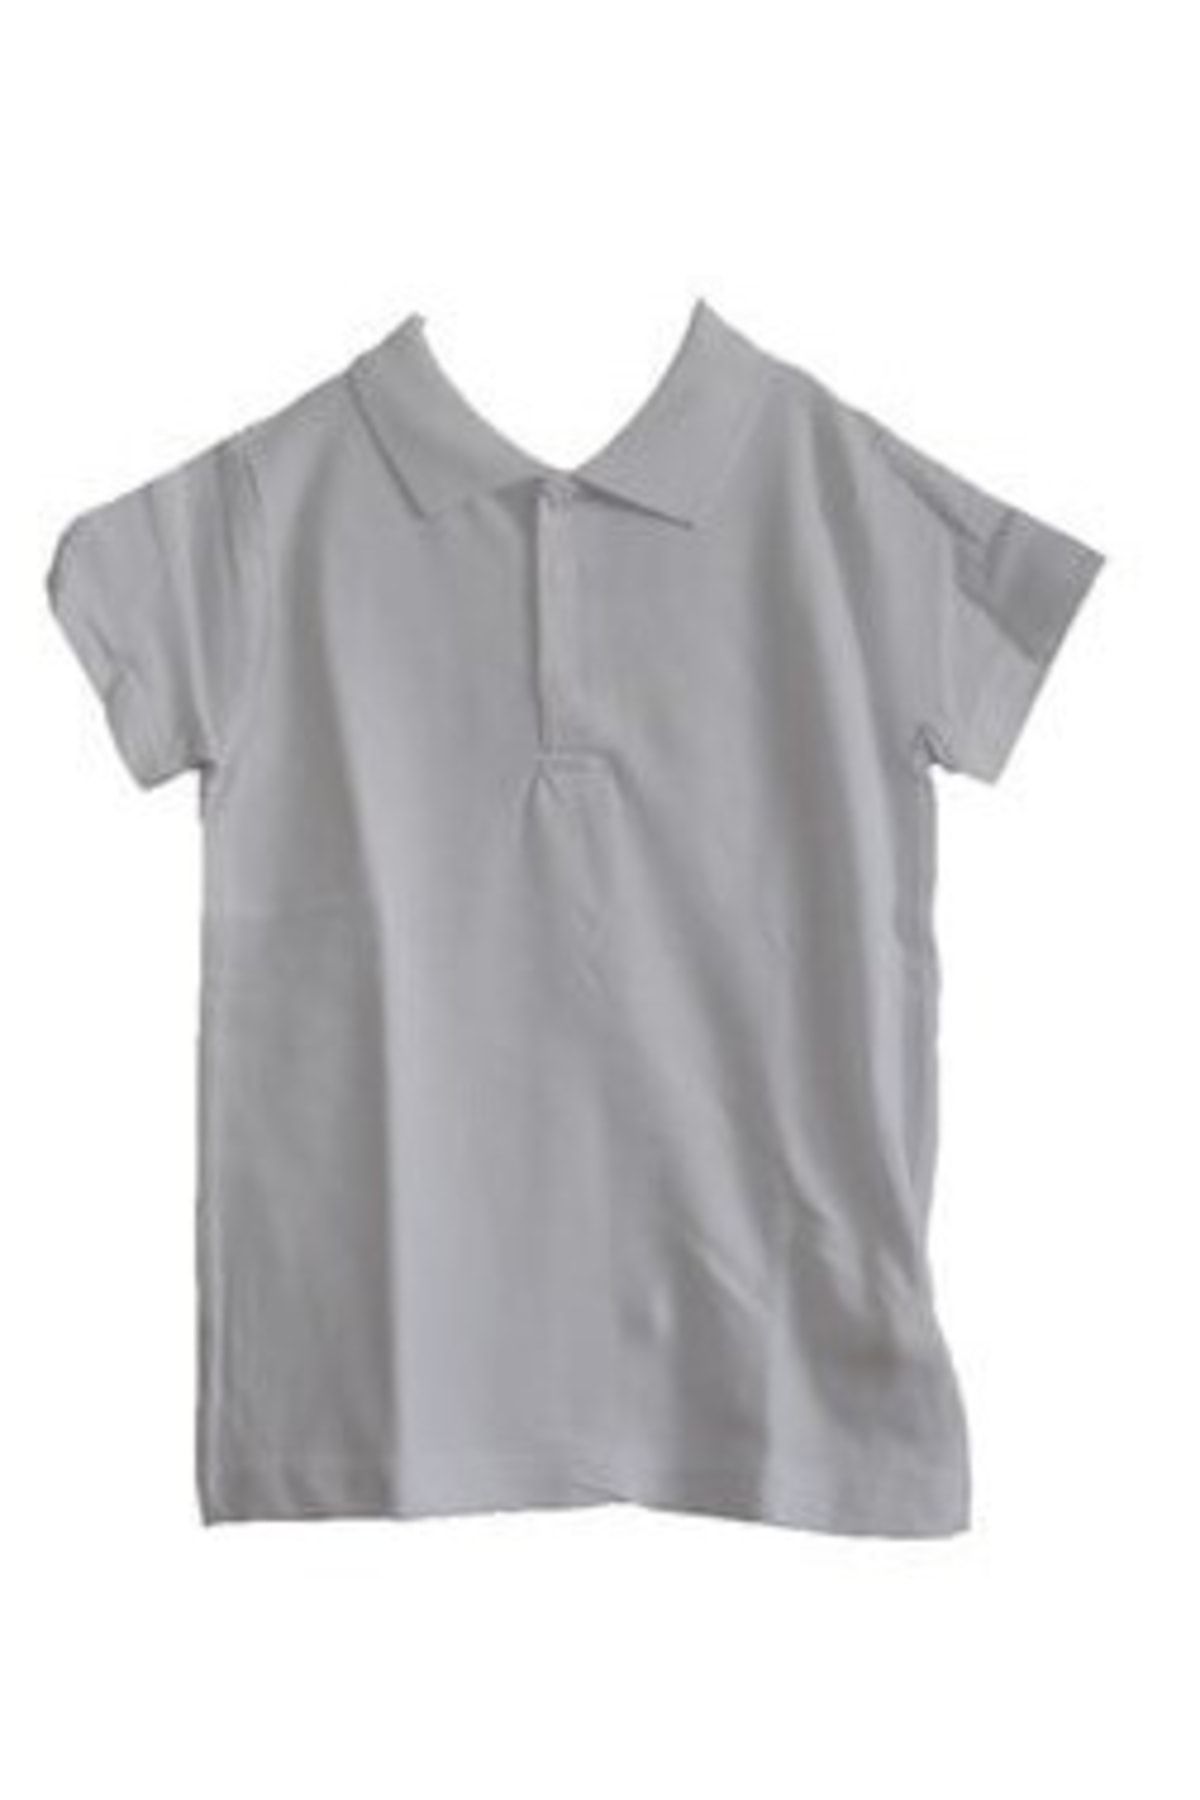 Zeyland Erkek Çocuk % 100 Pamuk Cotton Beyaz Renk Basic Polo Yaka T-shirt